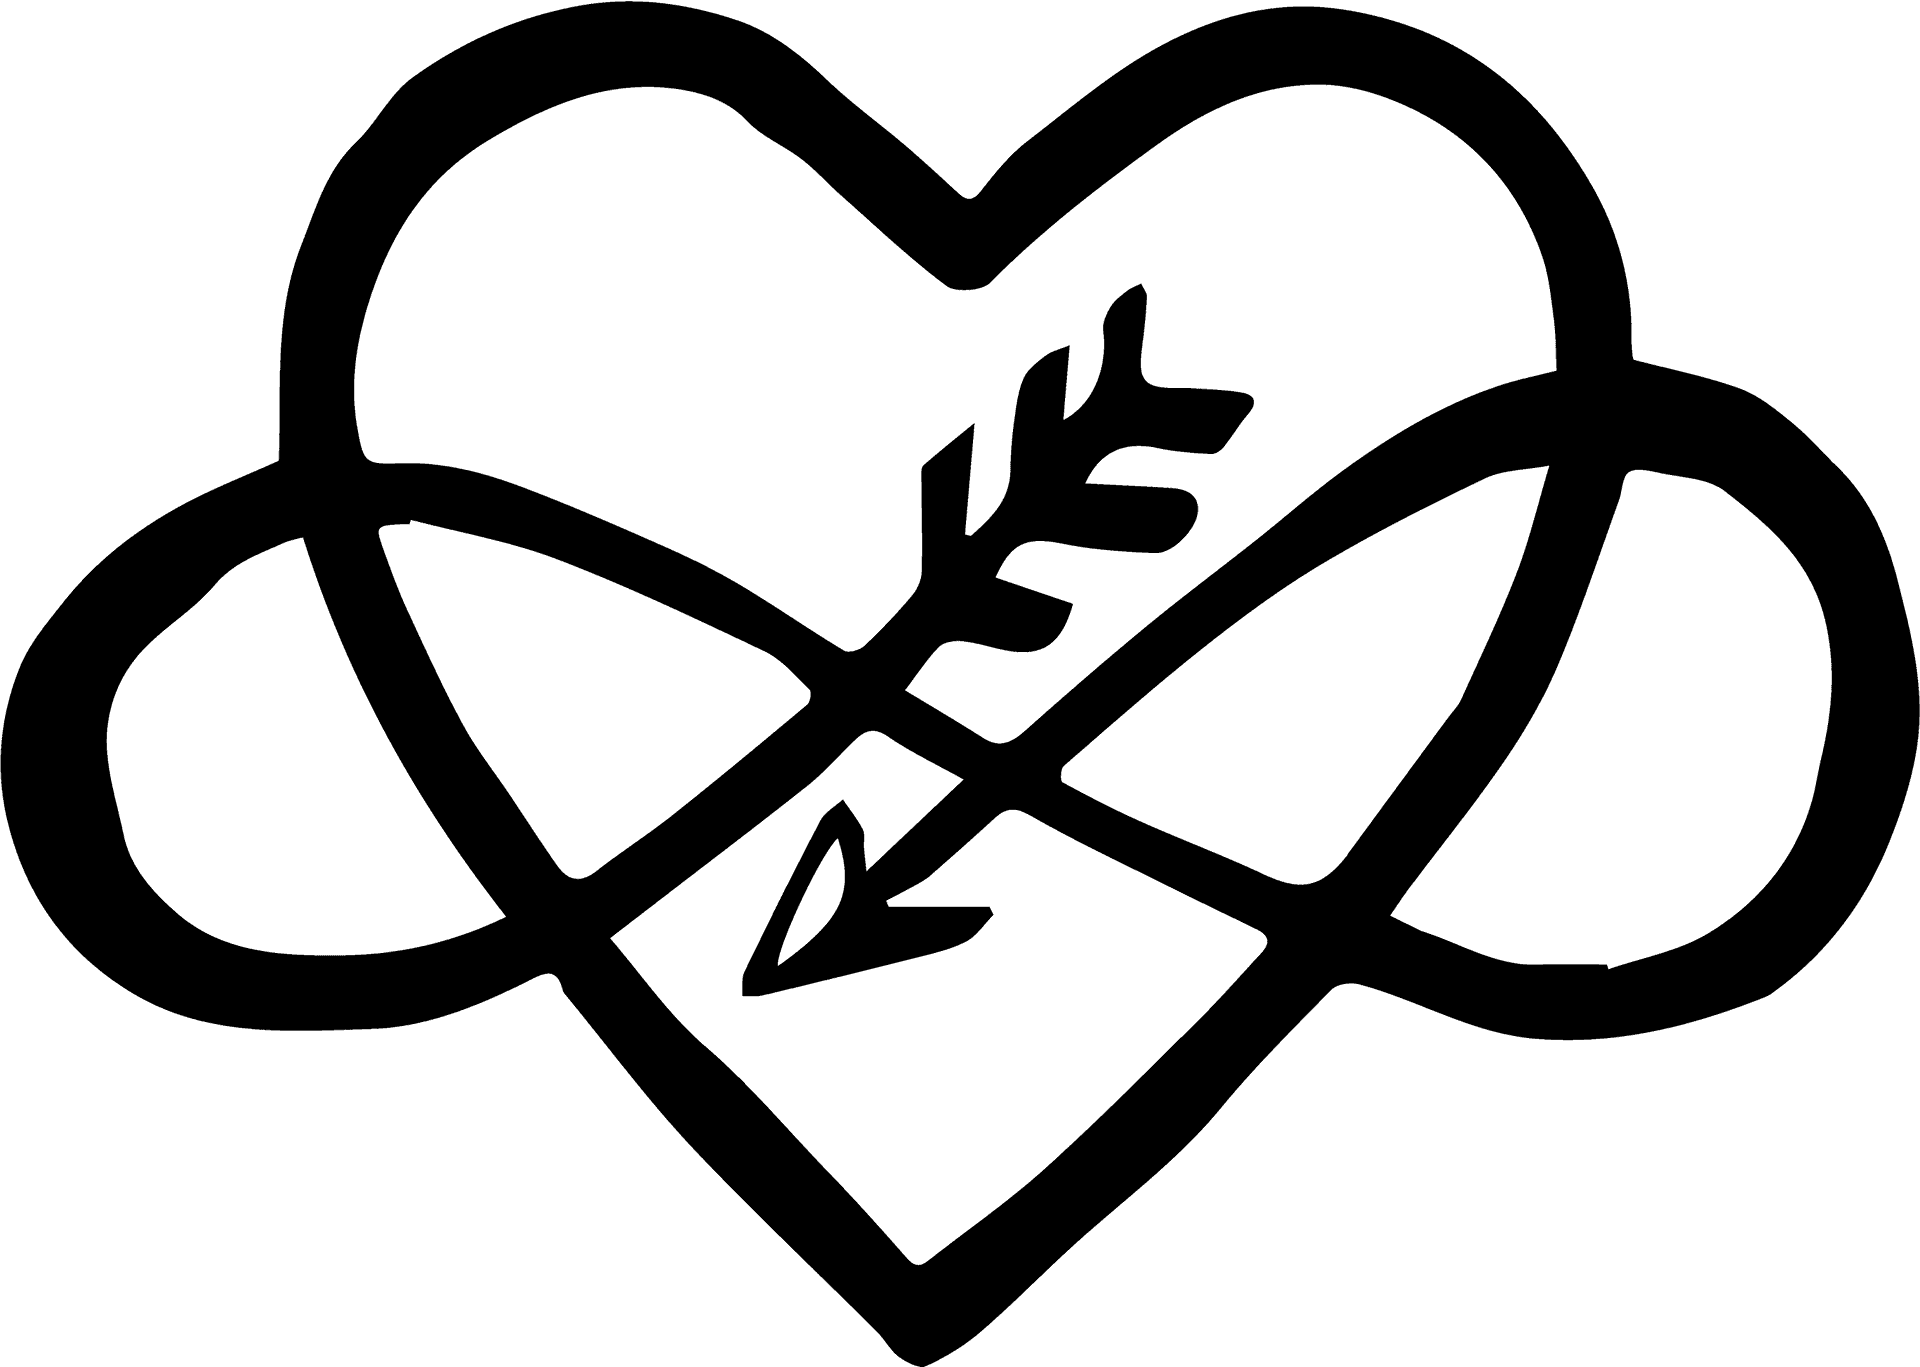 Heart Infinity Arrow Symbol PNG image